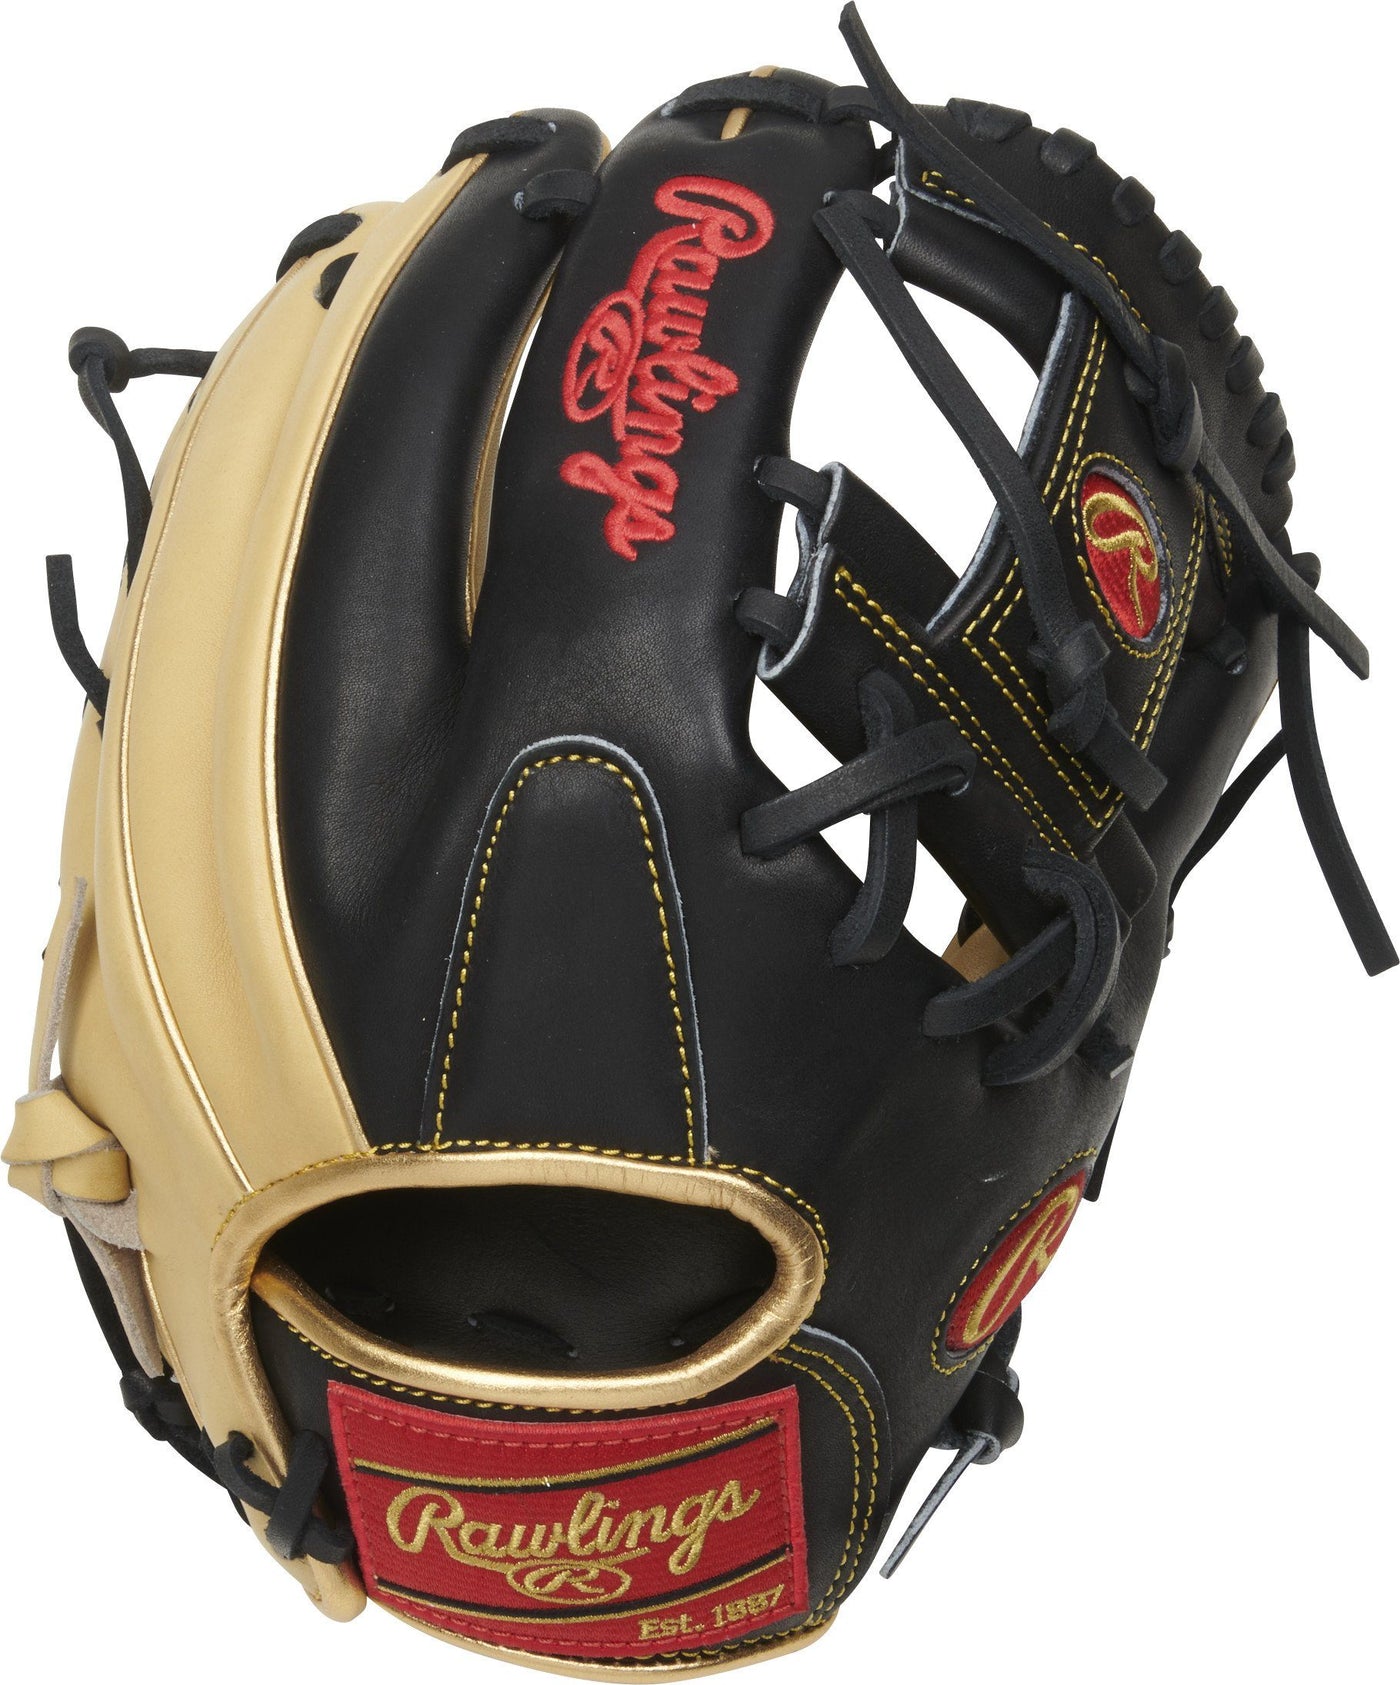 Rawlings 11.5 MLB Leather Baseball Glove - Black/Gray